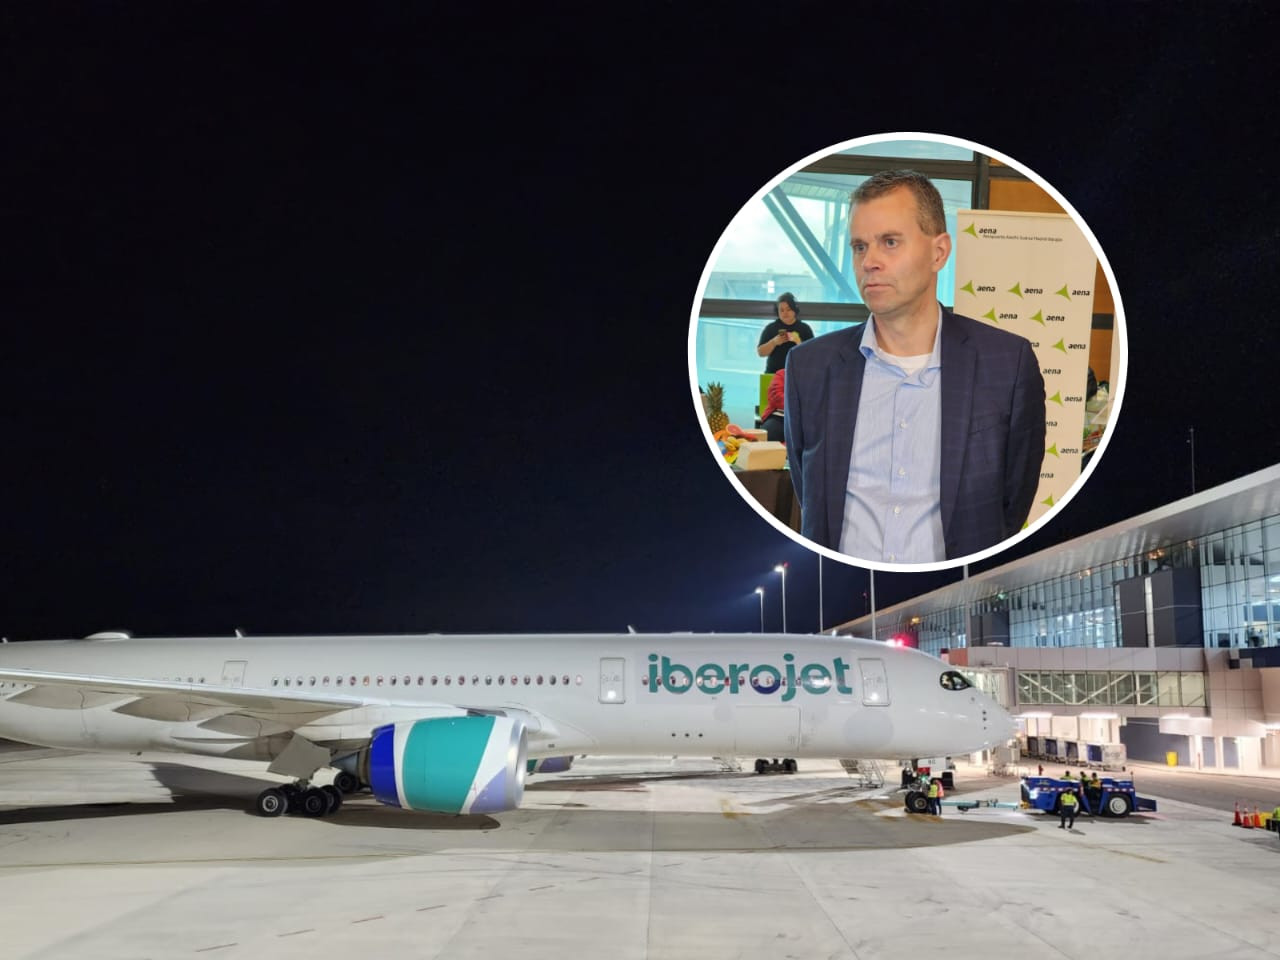 Noticias-Aeropuerto-Tegucigalpa-Honduras-Toncontín-Palmerola: Más de 28,000 pasajeros han volado con Iberojet en solo 5 meses